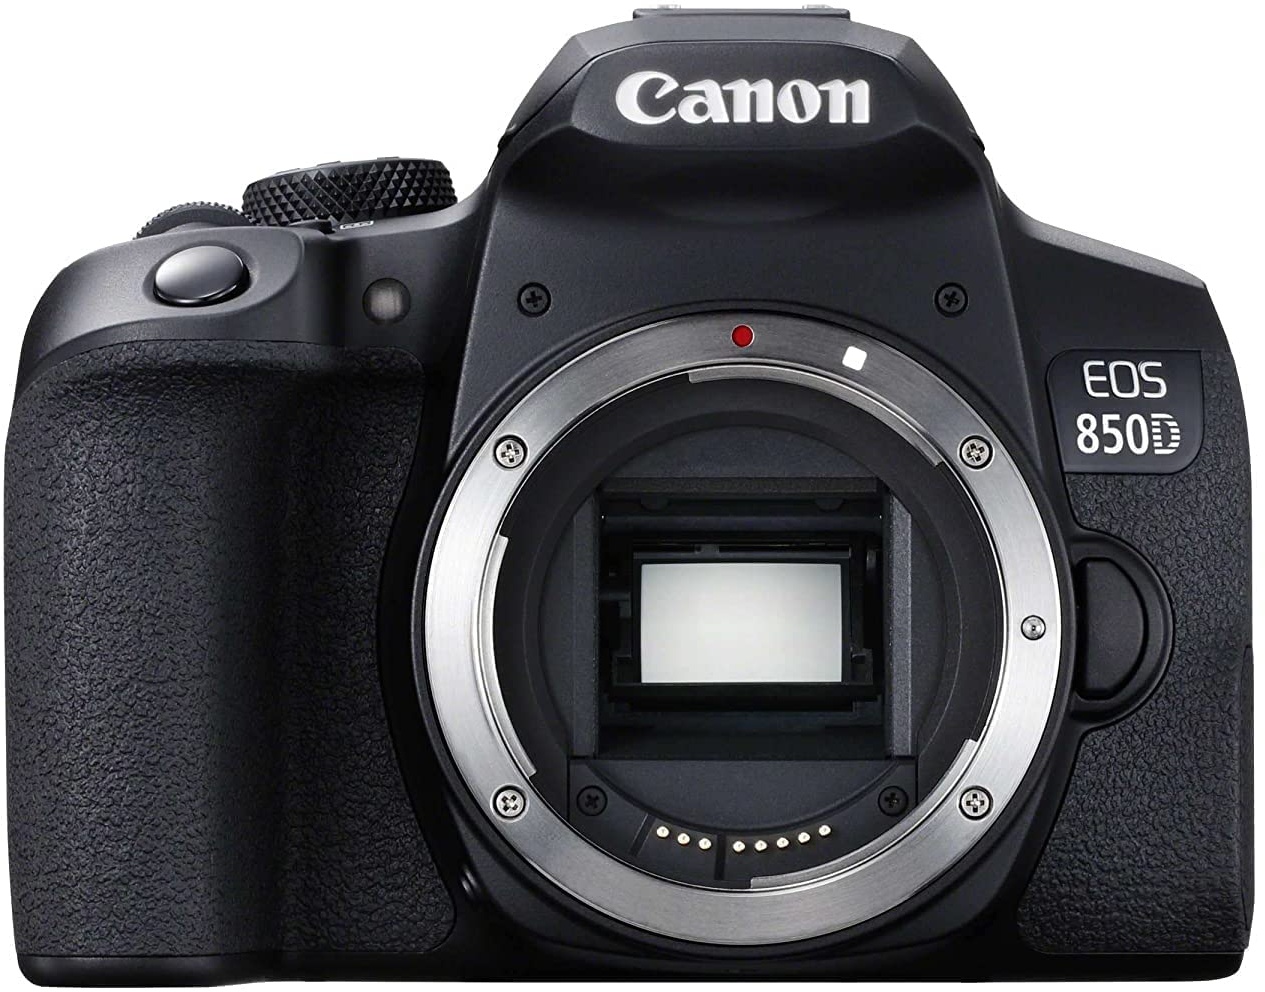 Canon EOS 850D DSLR Digitalkamera Gehäuse (24,1 Megapixel, 7,5 cm (3 Zoll) Display, APS-C Sensor, 45 AF-Kreuzsensoren, 4K, DIGIC 8 Bildprozessor, WLAN, Bluetooth) schwarz